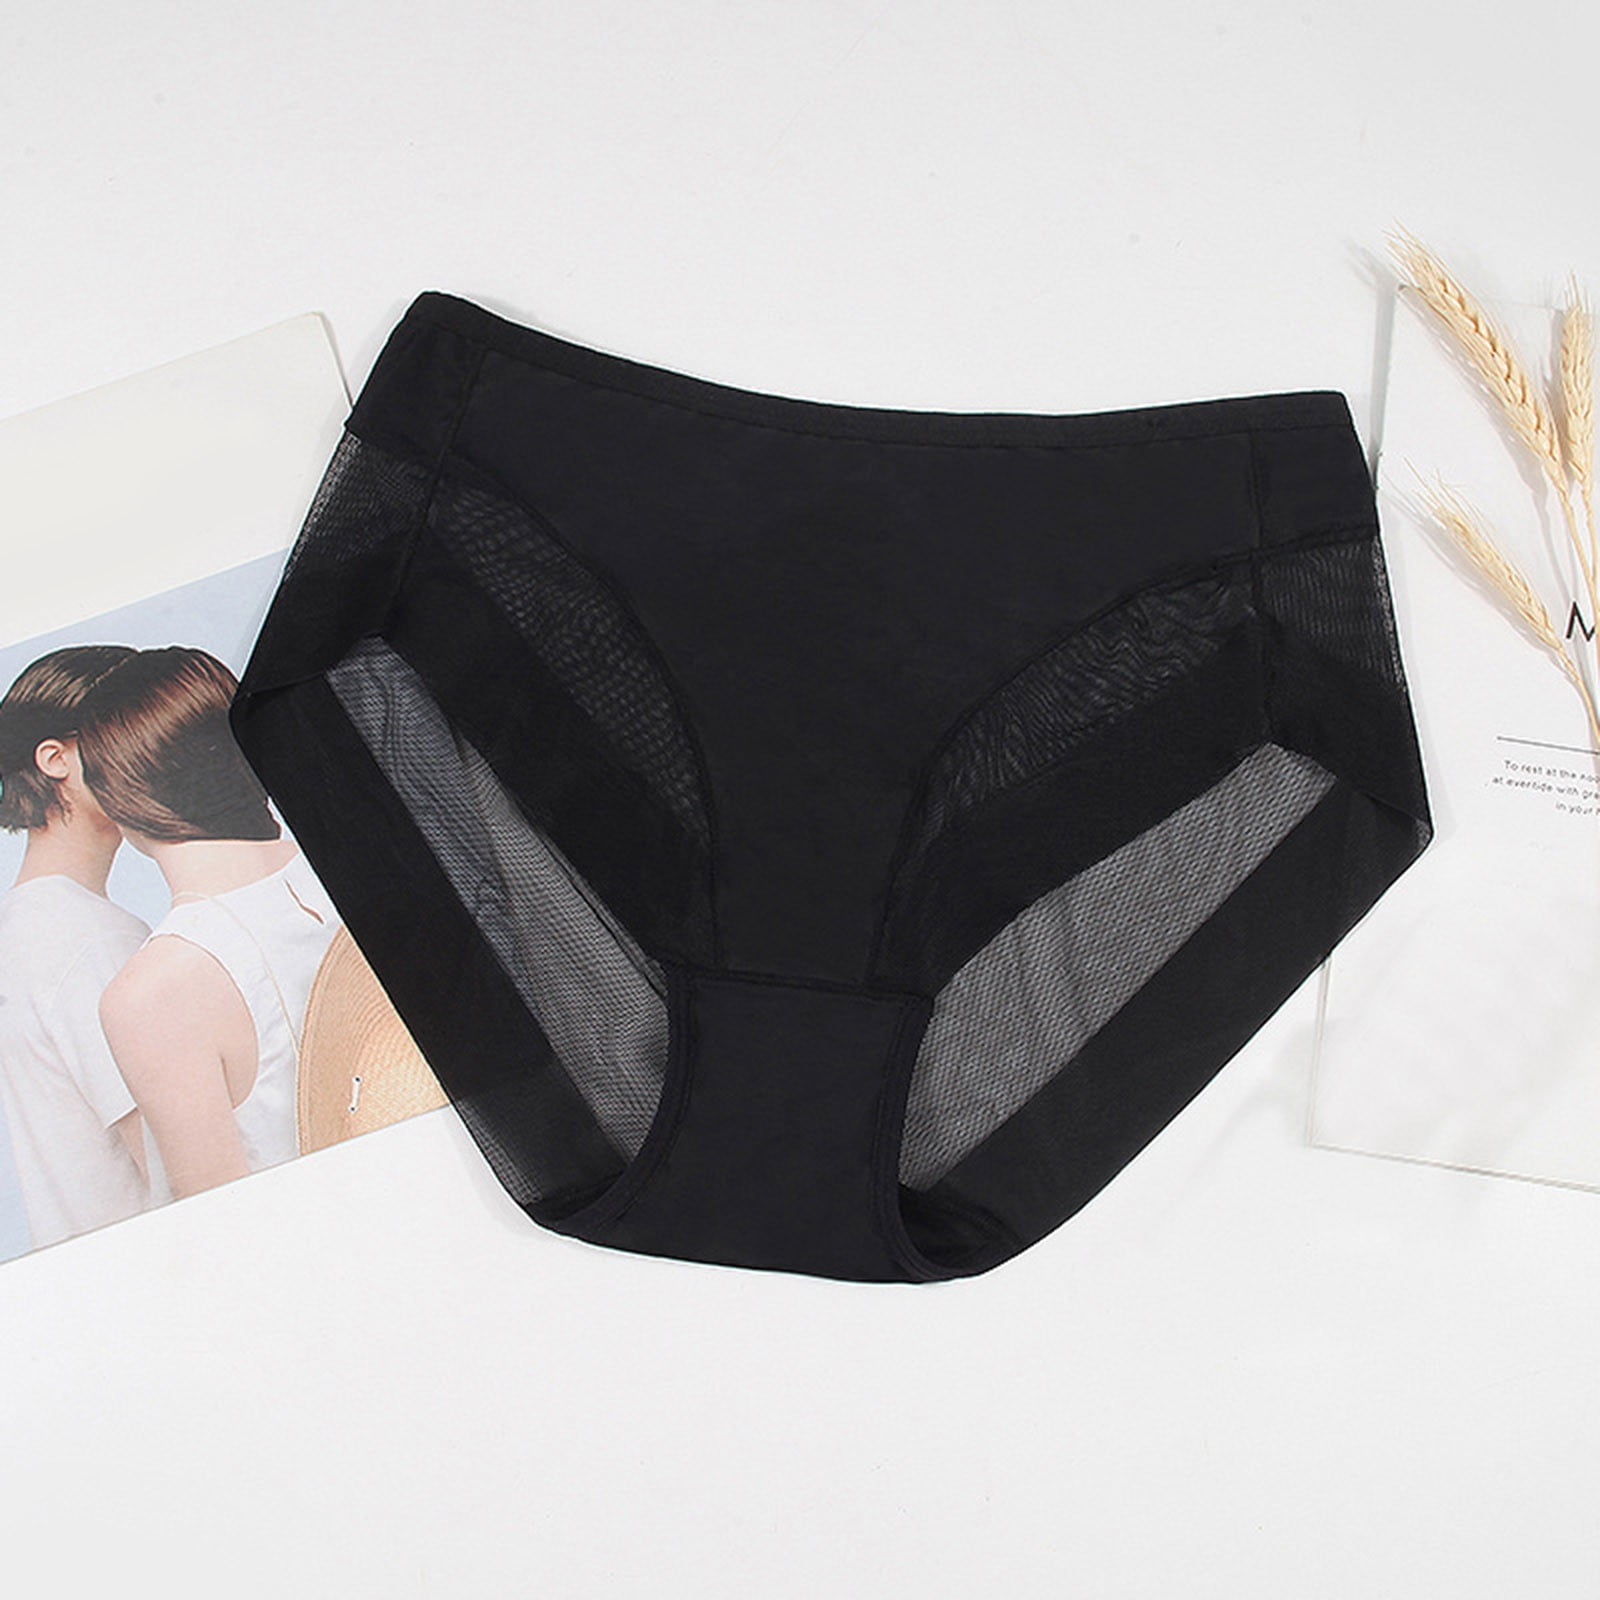 CLZOUD Plus Size Underwear for Women Black Nylon Spandex